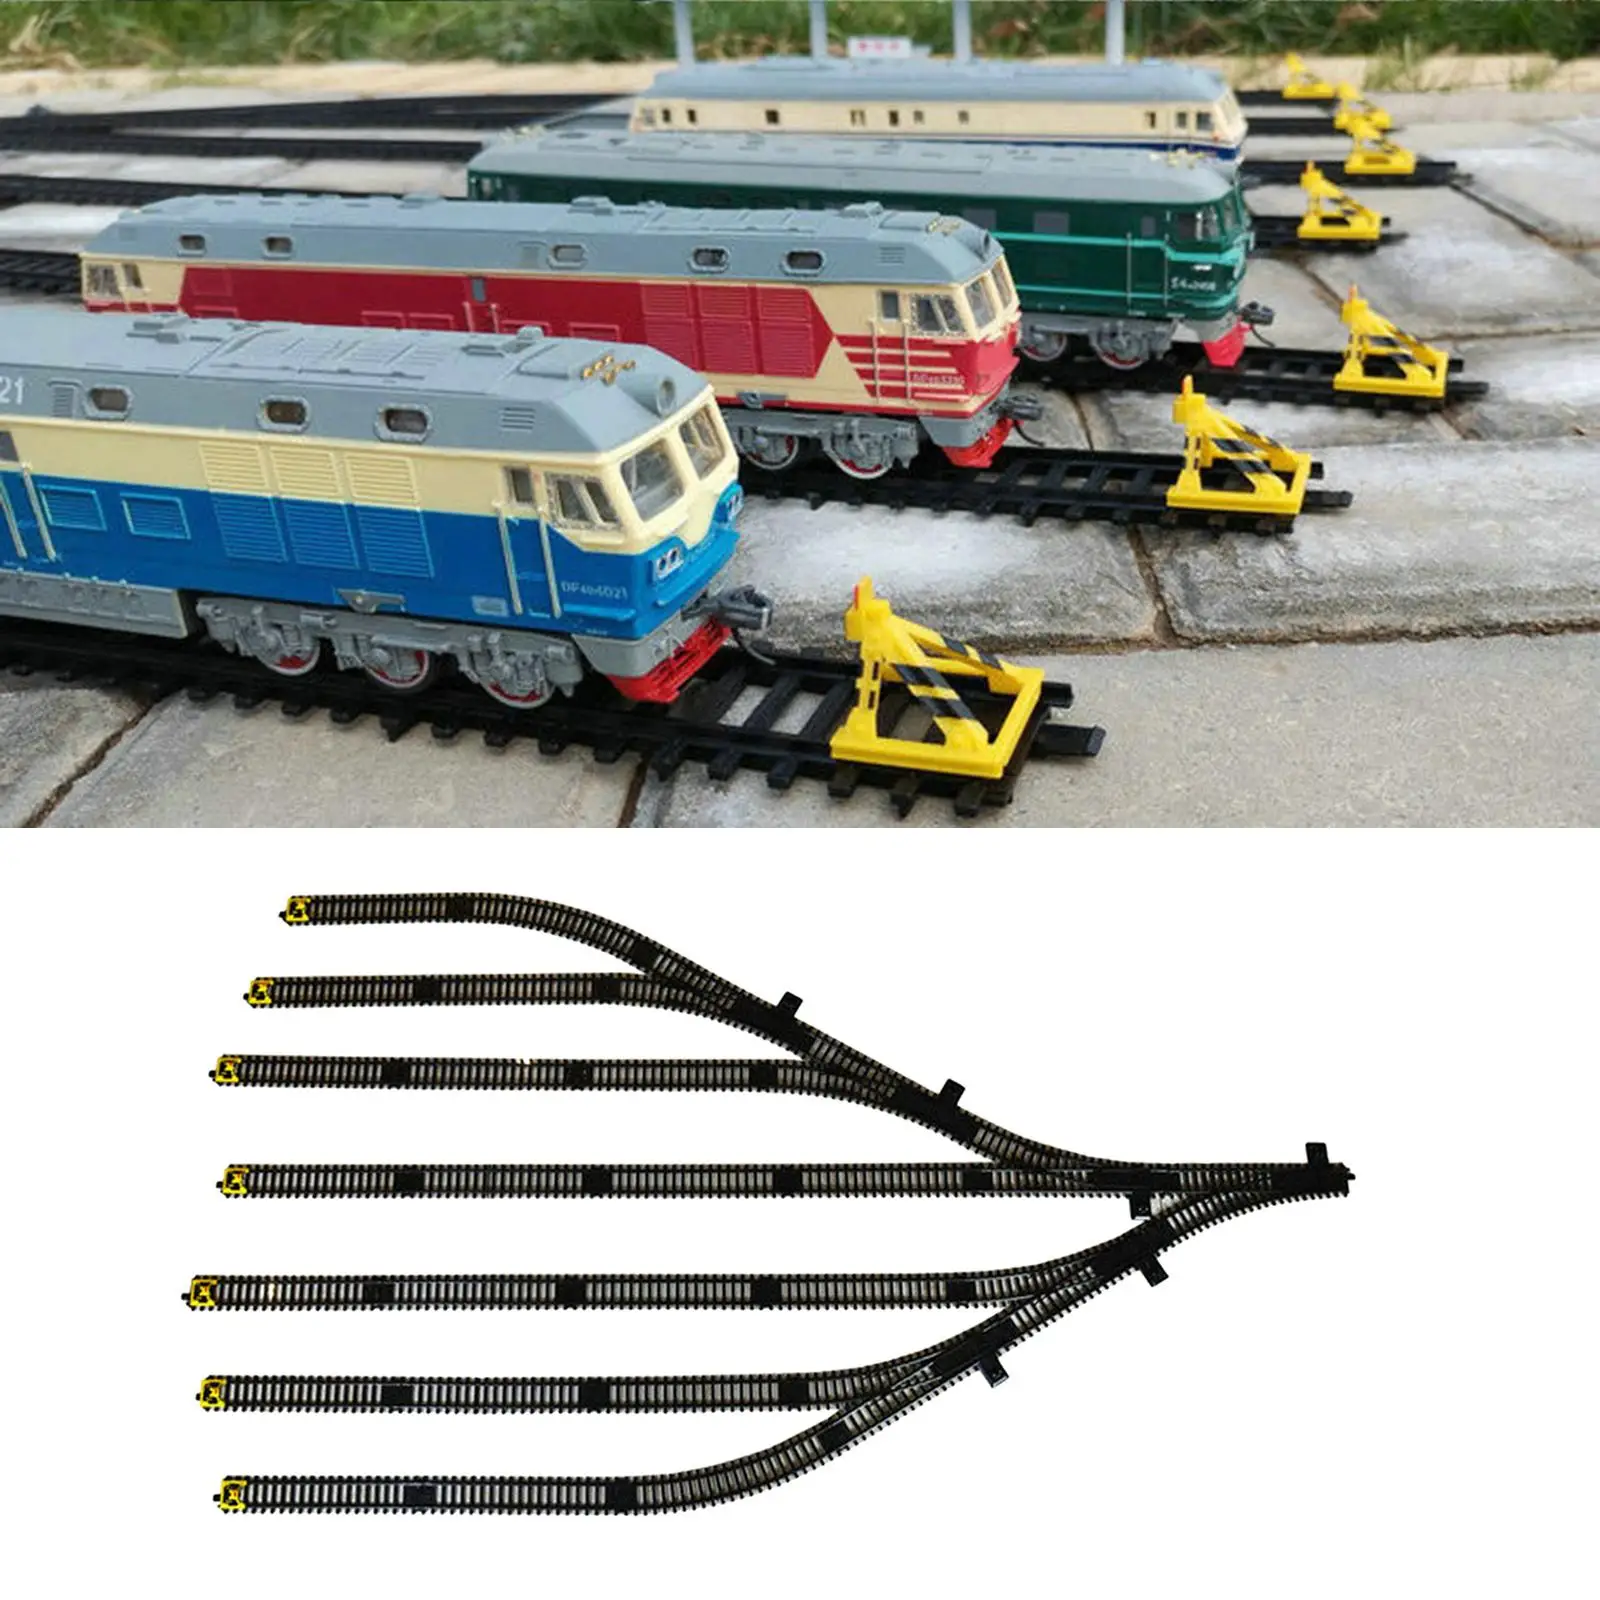 34x Ho Gauge Model Railway Track Scenary Diorama for Architecture Model Micro Landscape